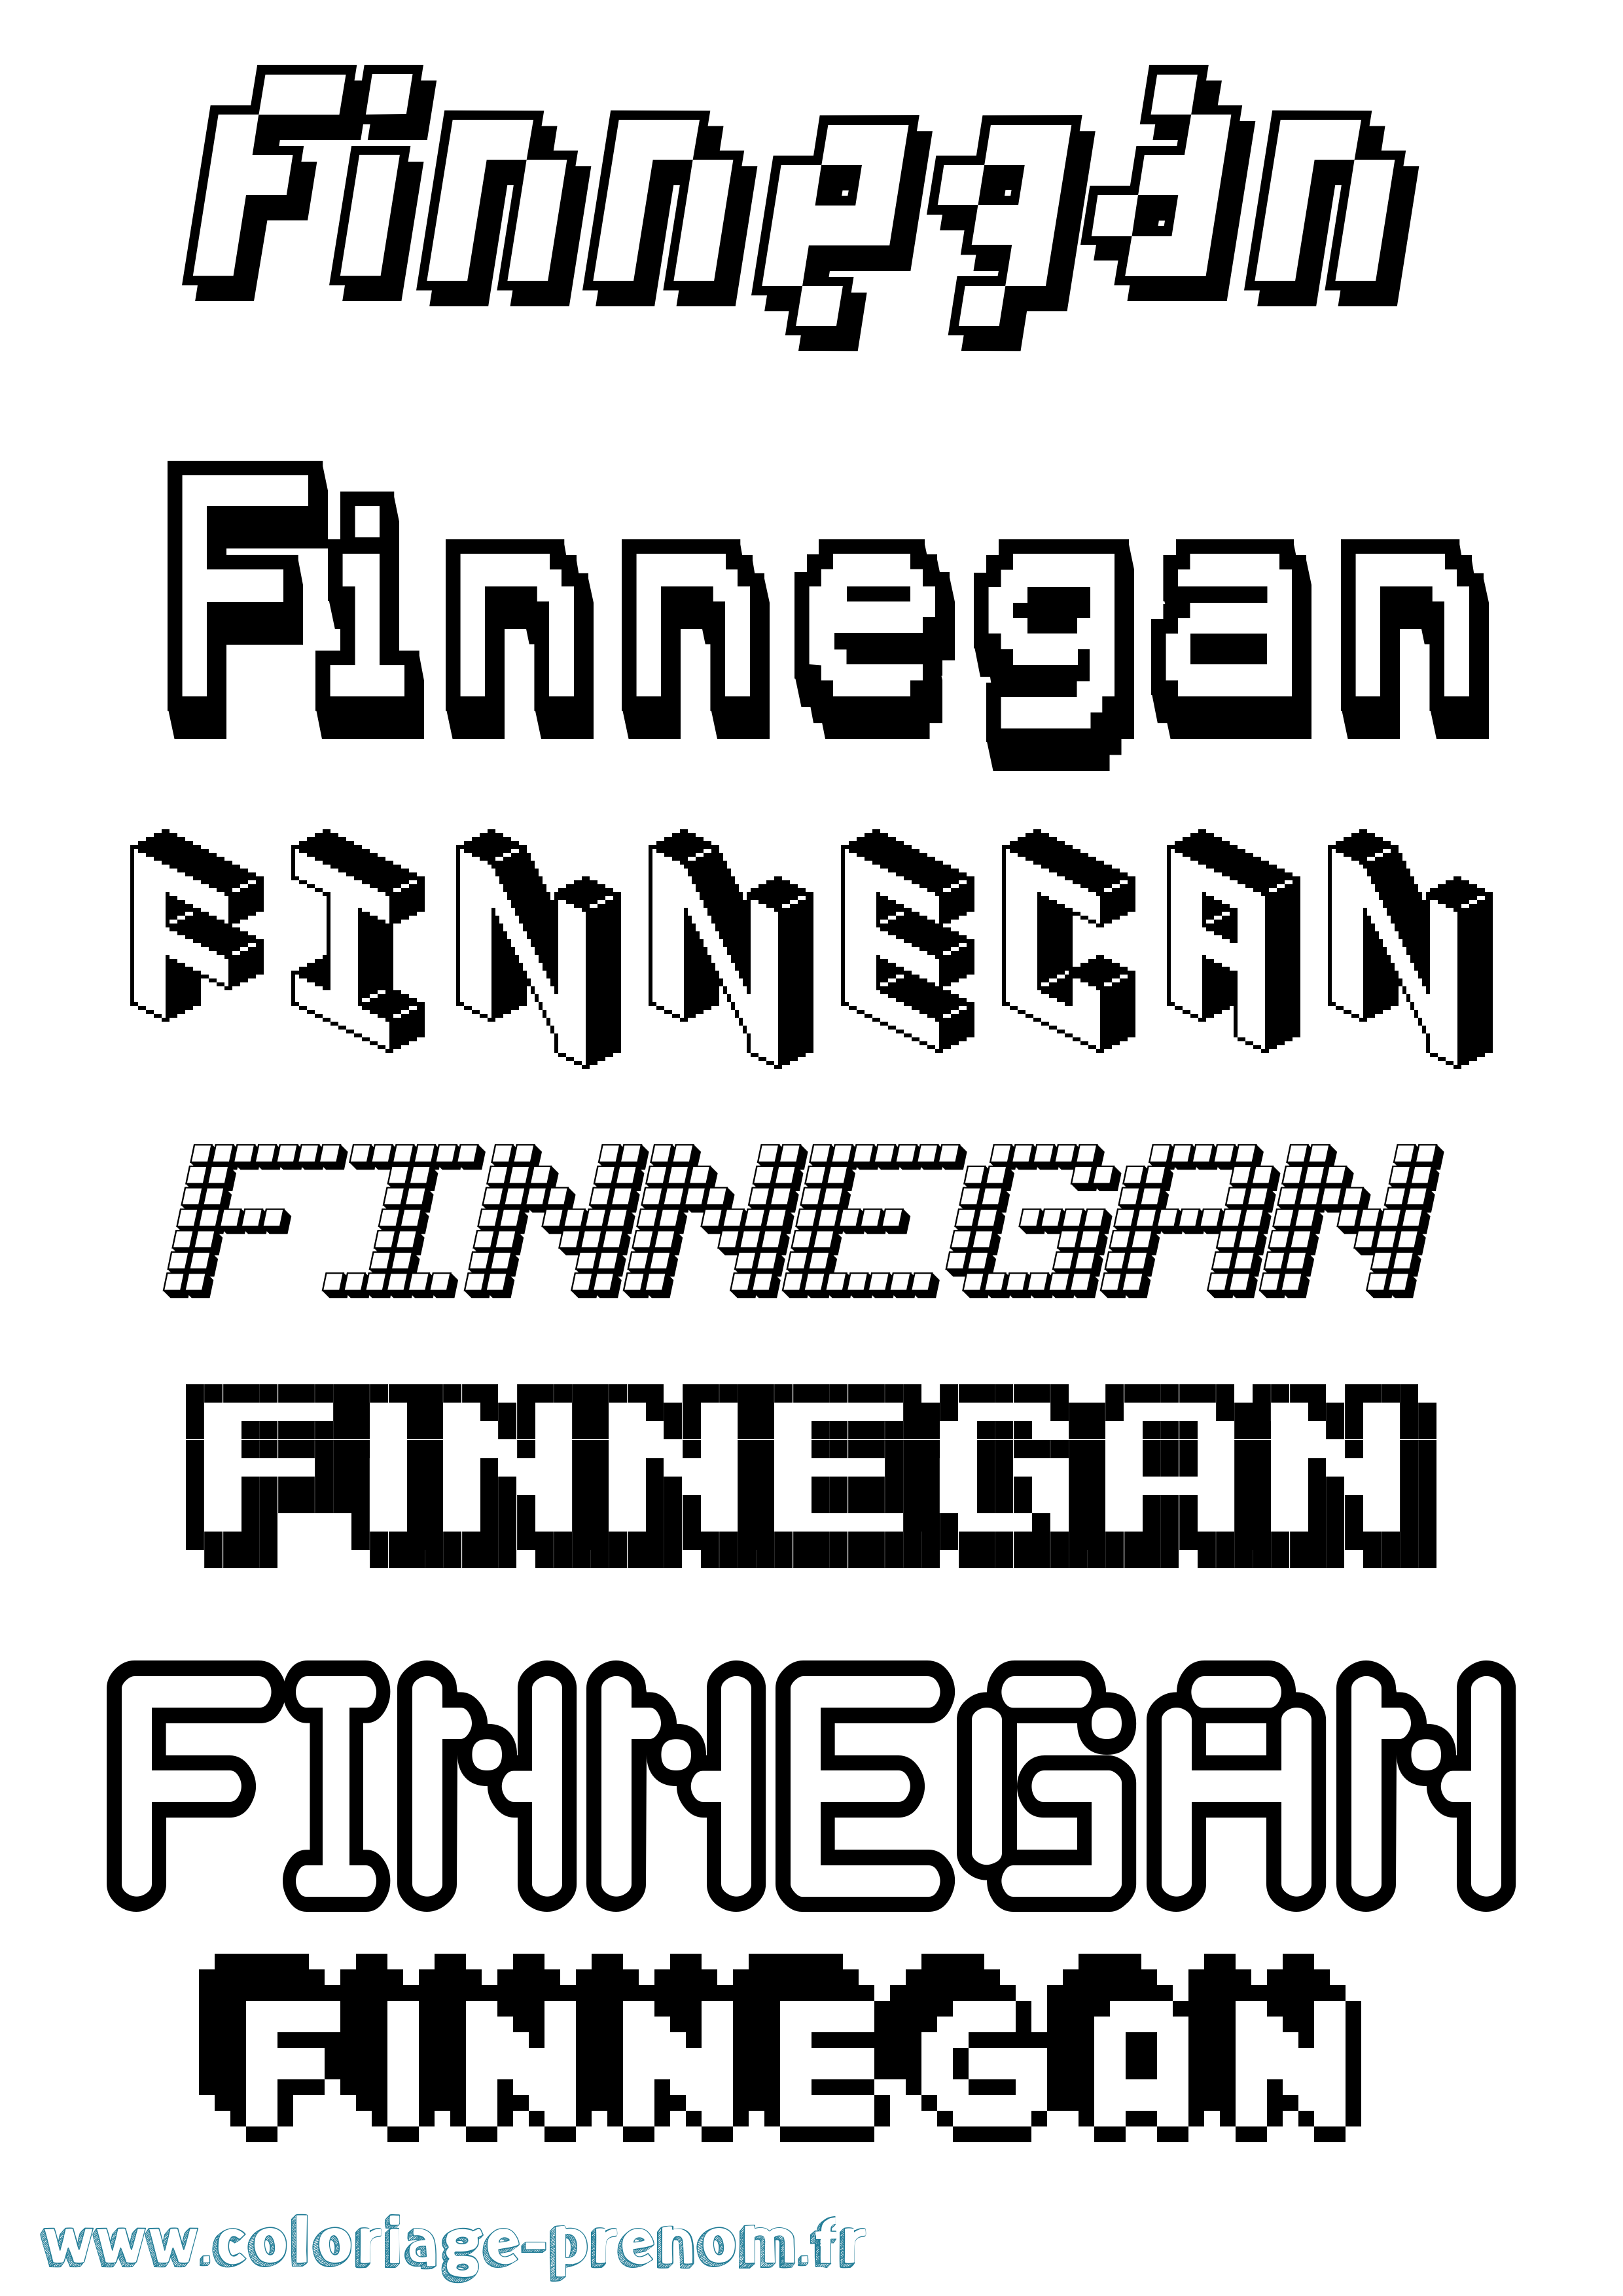 Coloriage prénom Finnegan Pixel